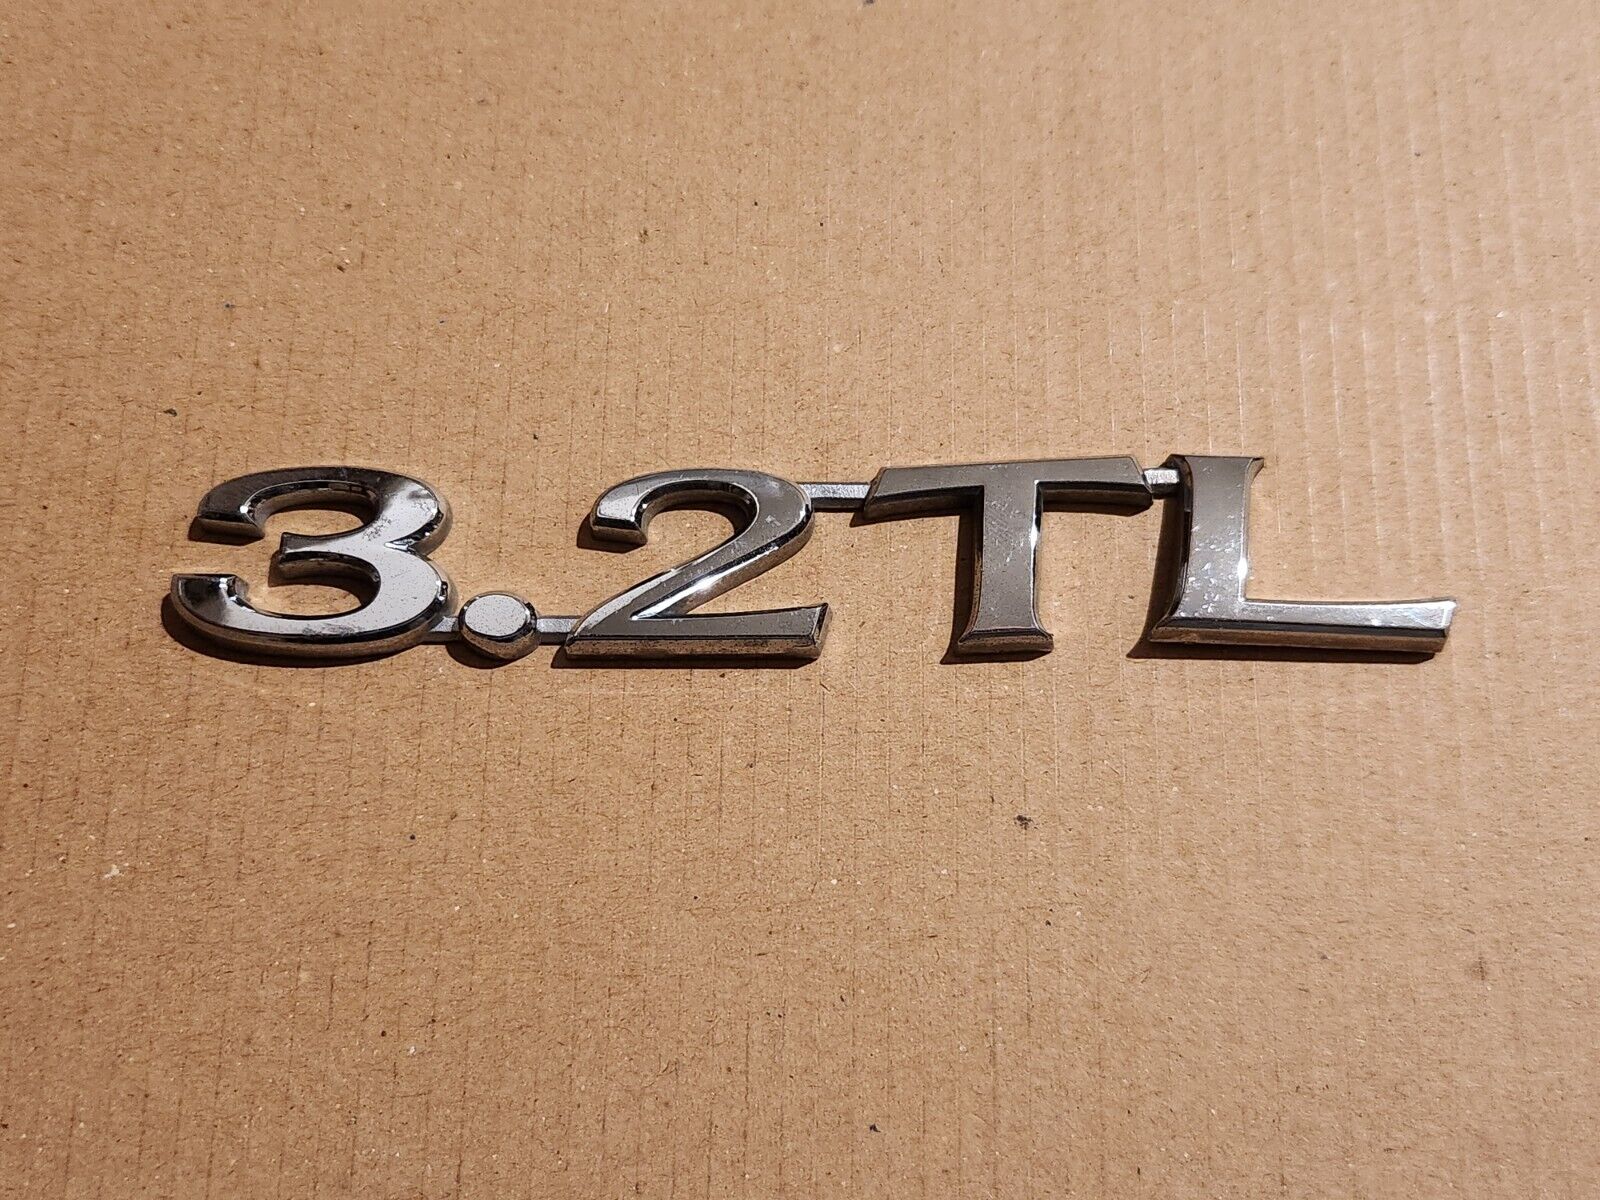 OEM 99 00 01 02 03 Acura 3.2 TL 3.2TL Rear Trunk Badge Logo Emblem Letters